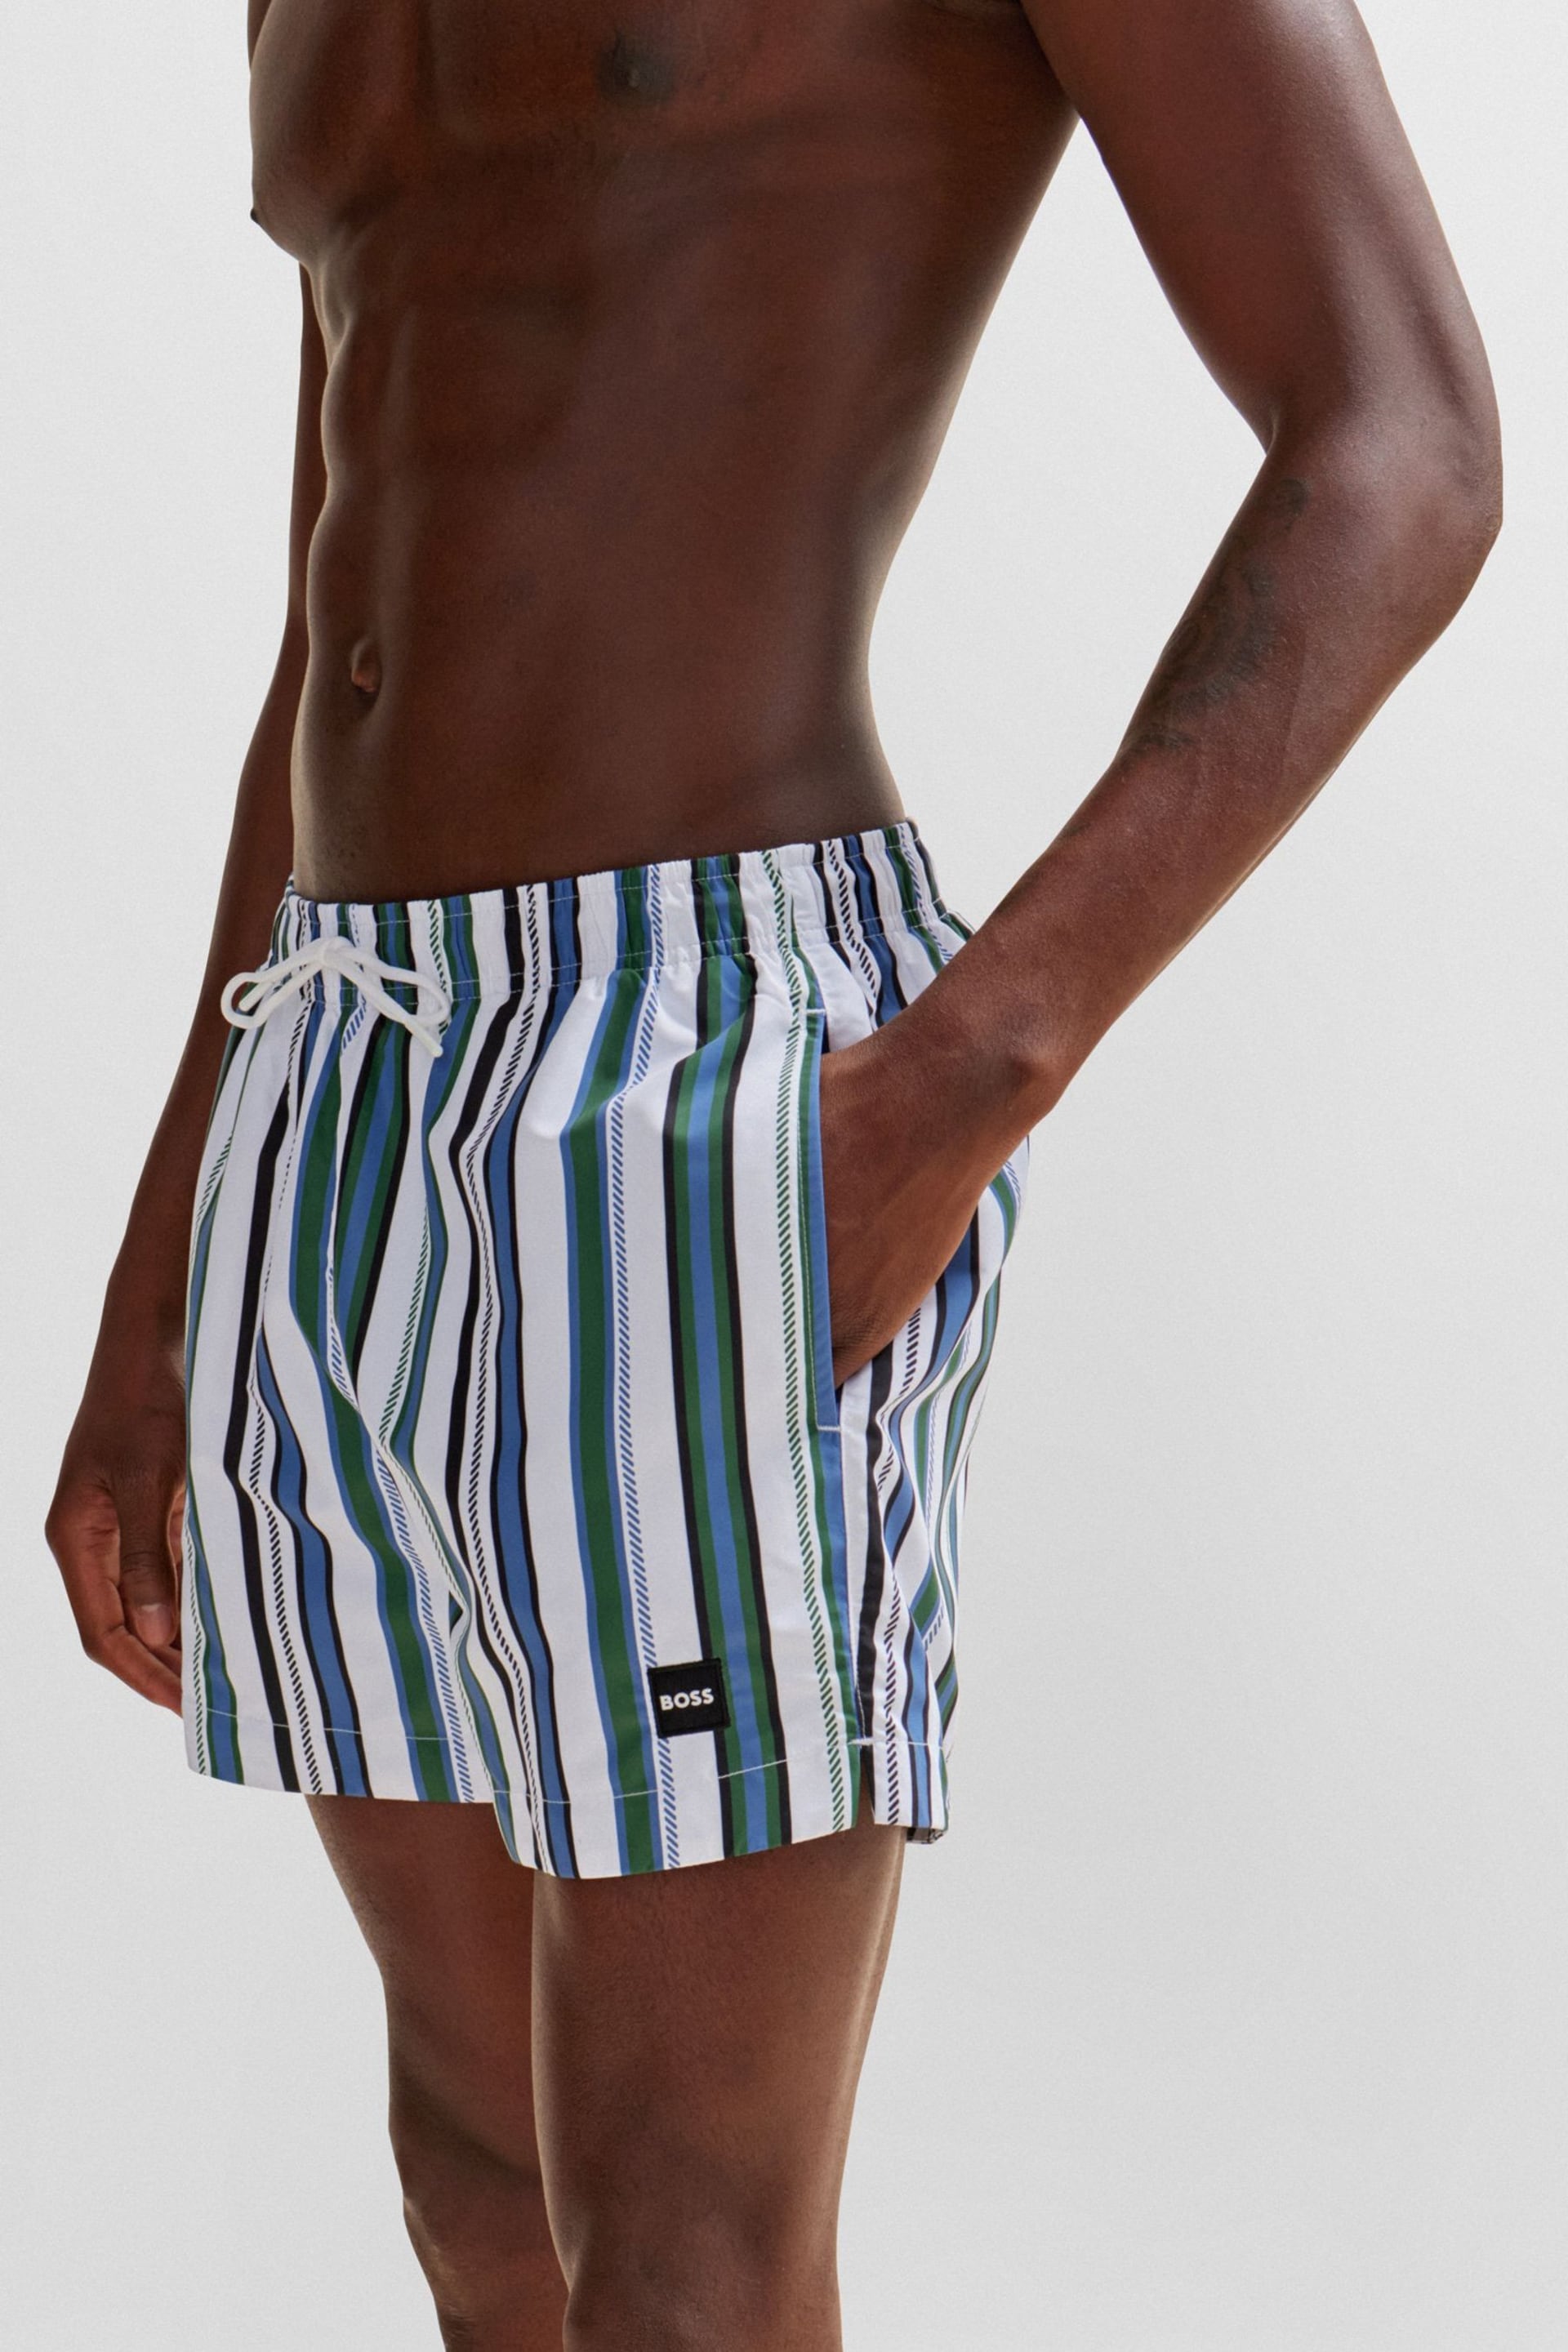 BOSS Blue Striped Swim Shorts - Image 4 of 5